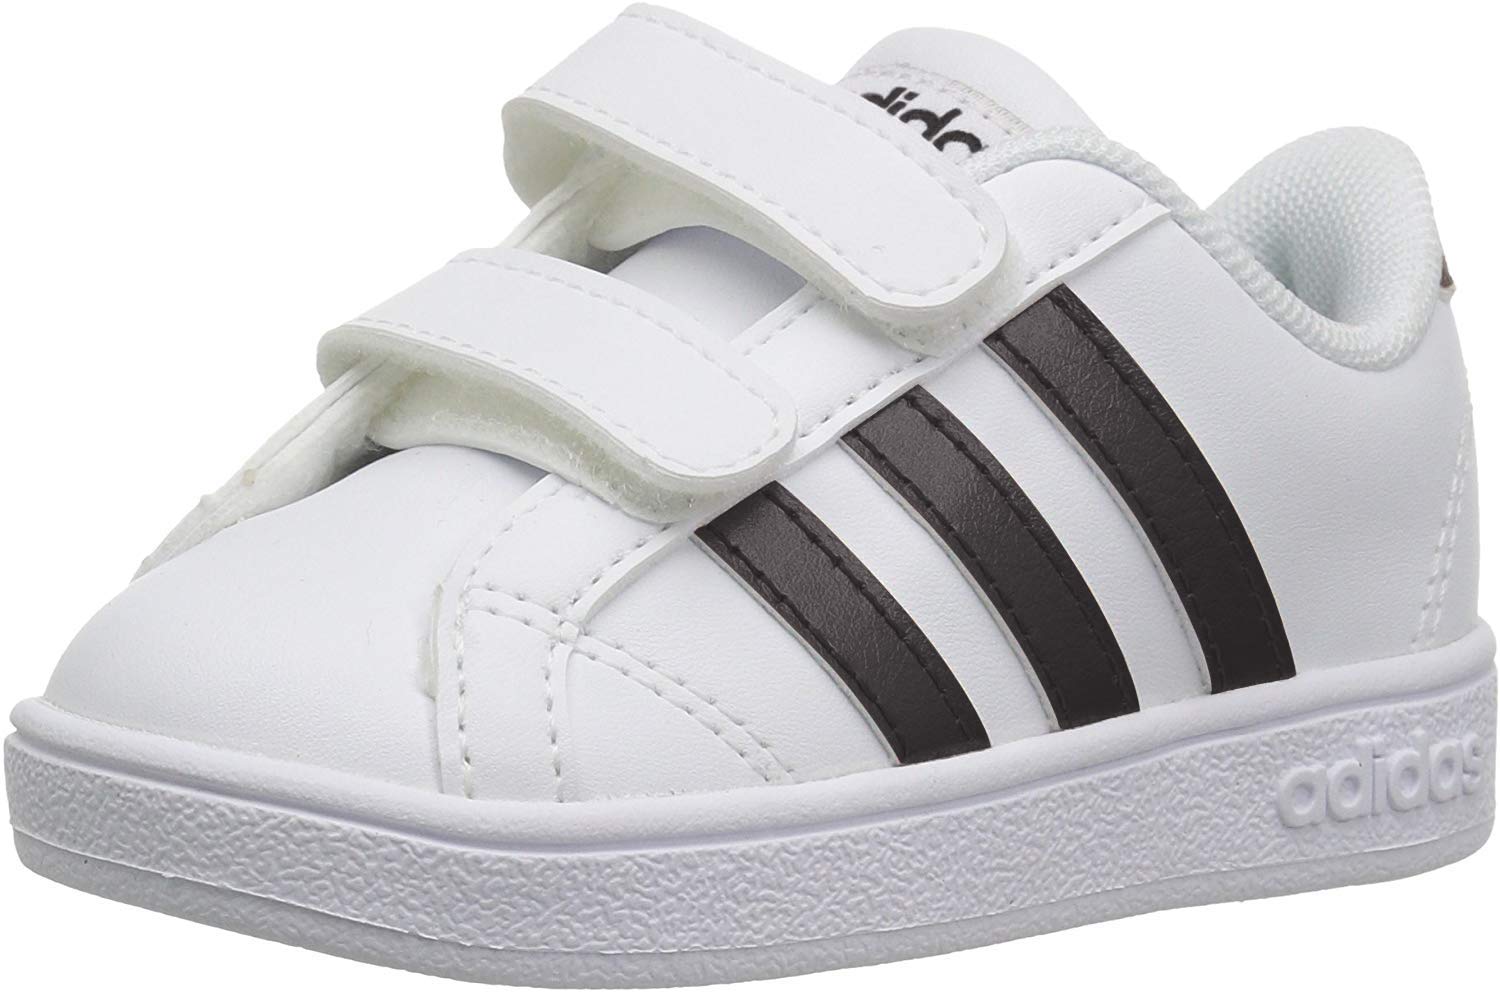 adidas Unisex-Child Toddler Baseline Shoes Sneaker